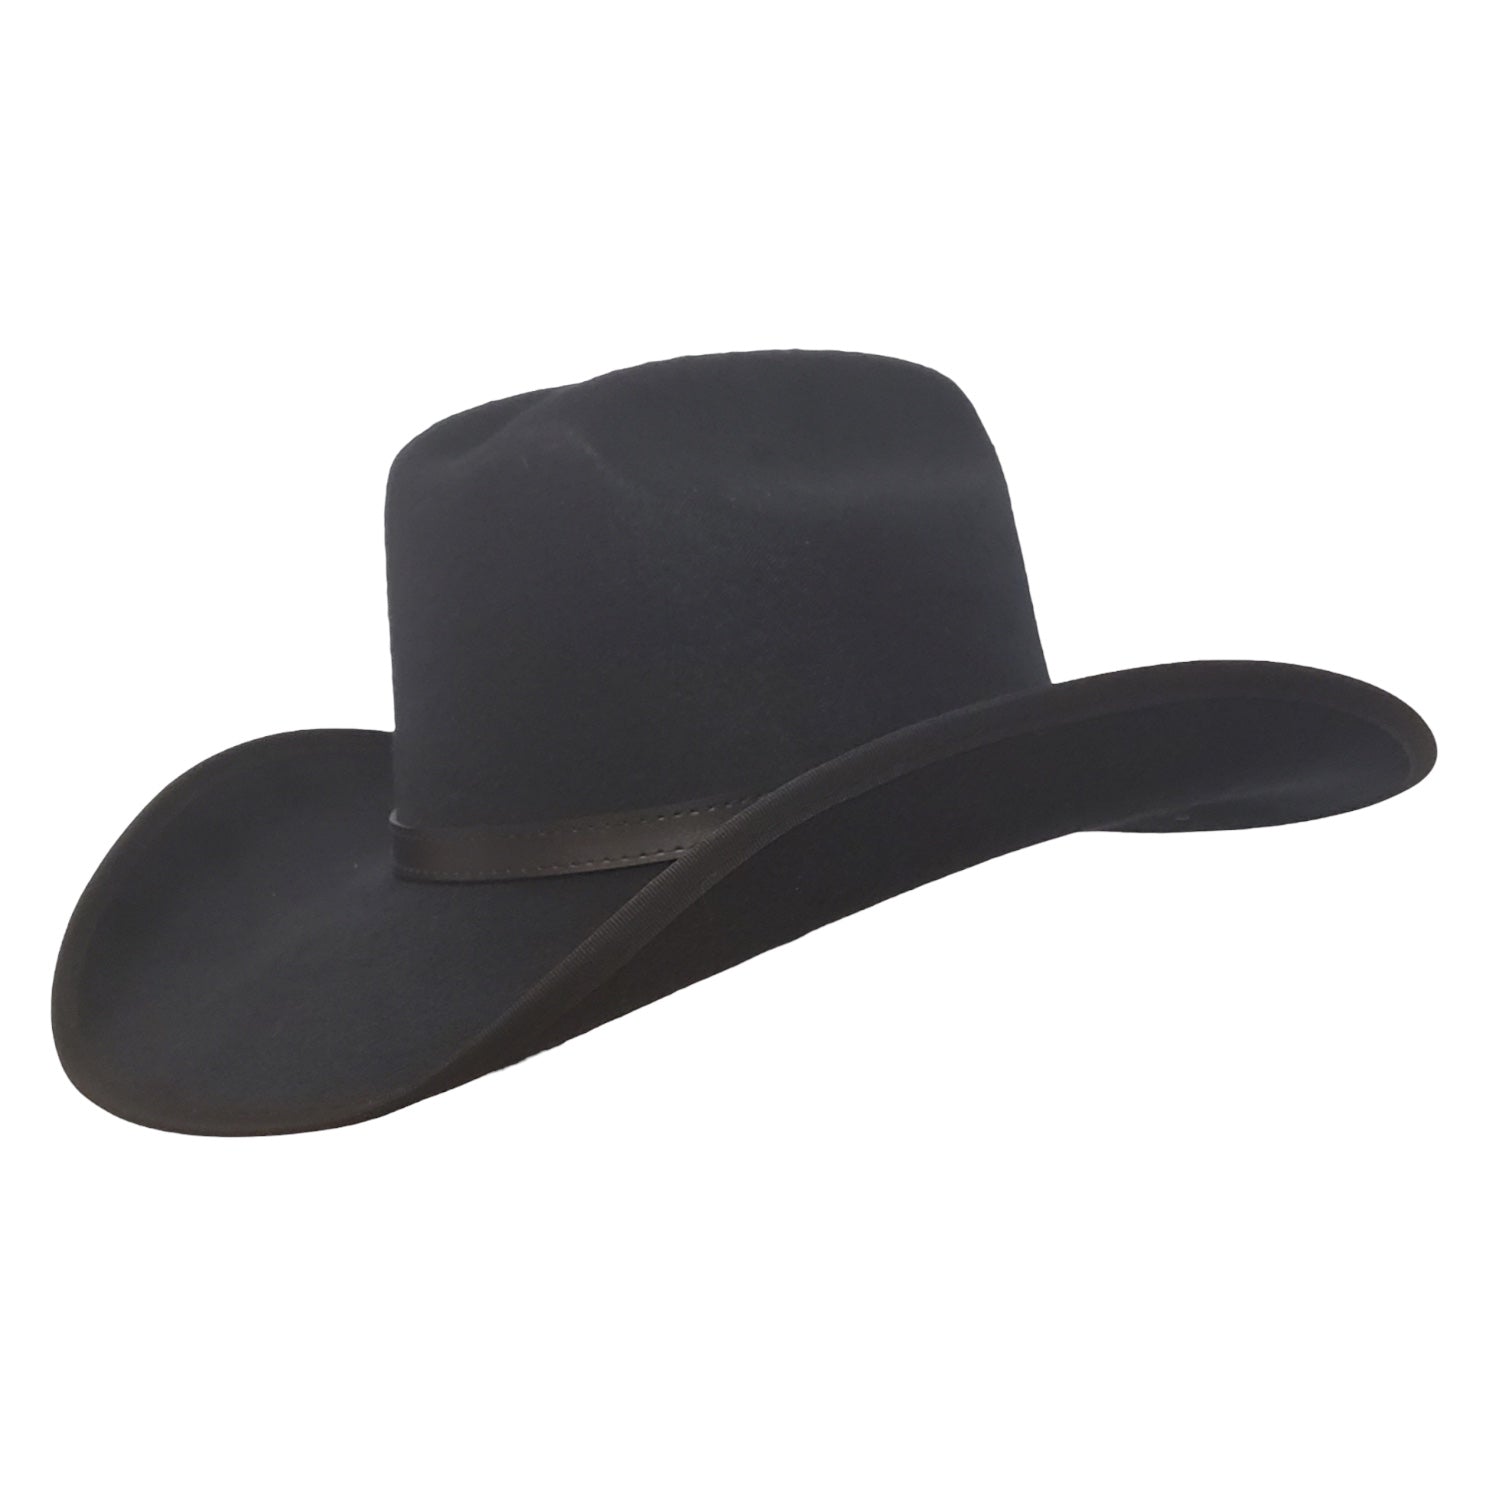 Cotton Felt Yellowstone Style Hat